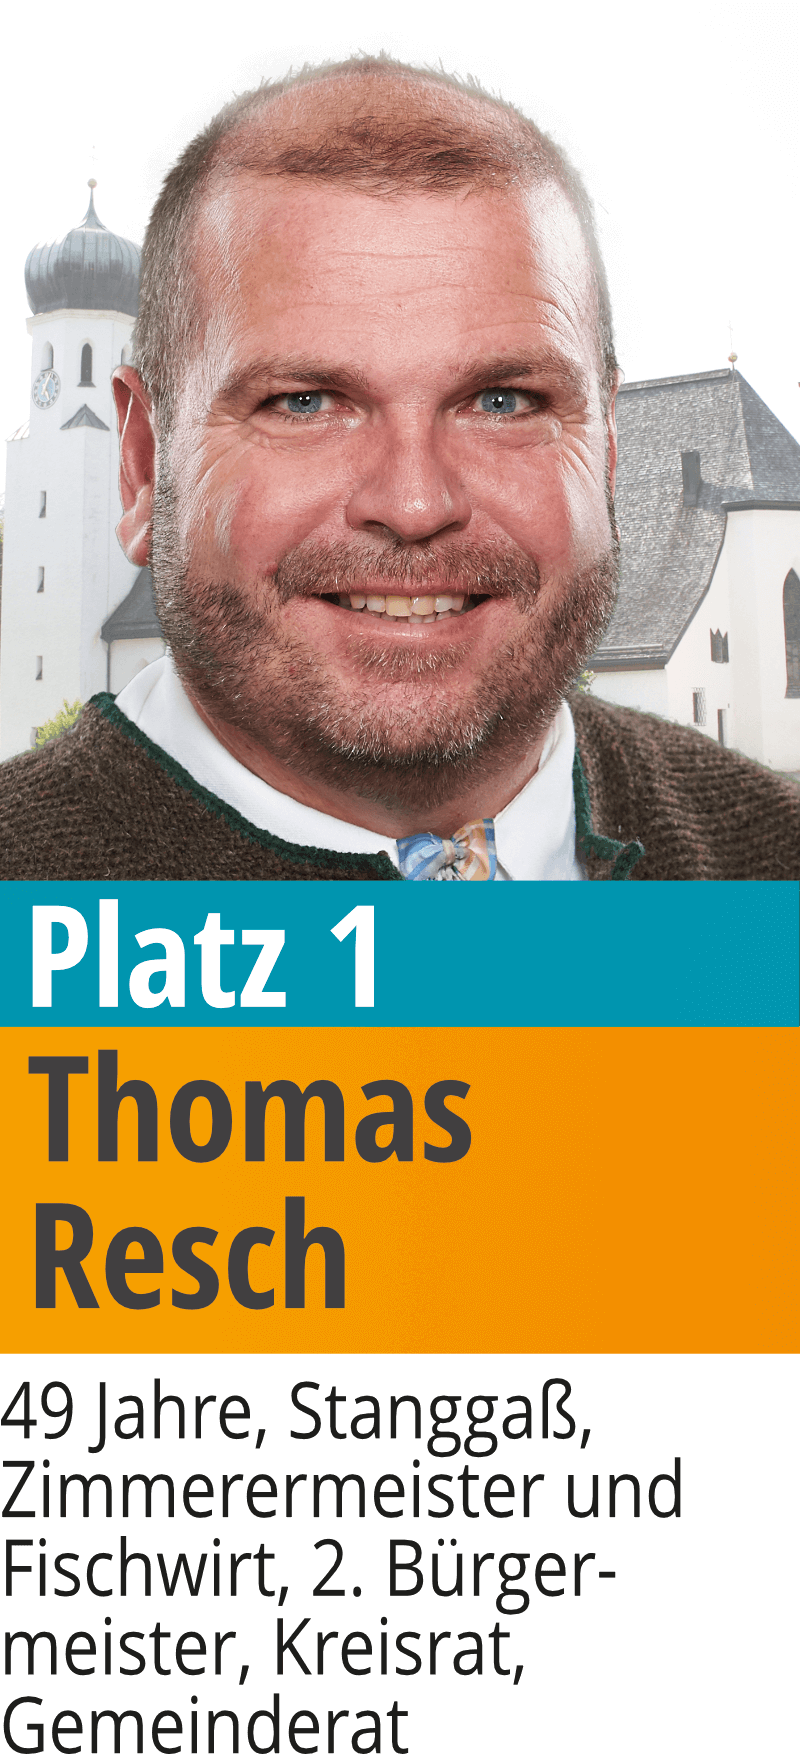 01 Thomas Resch